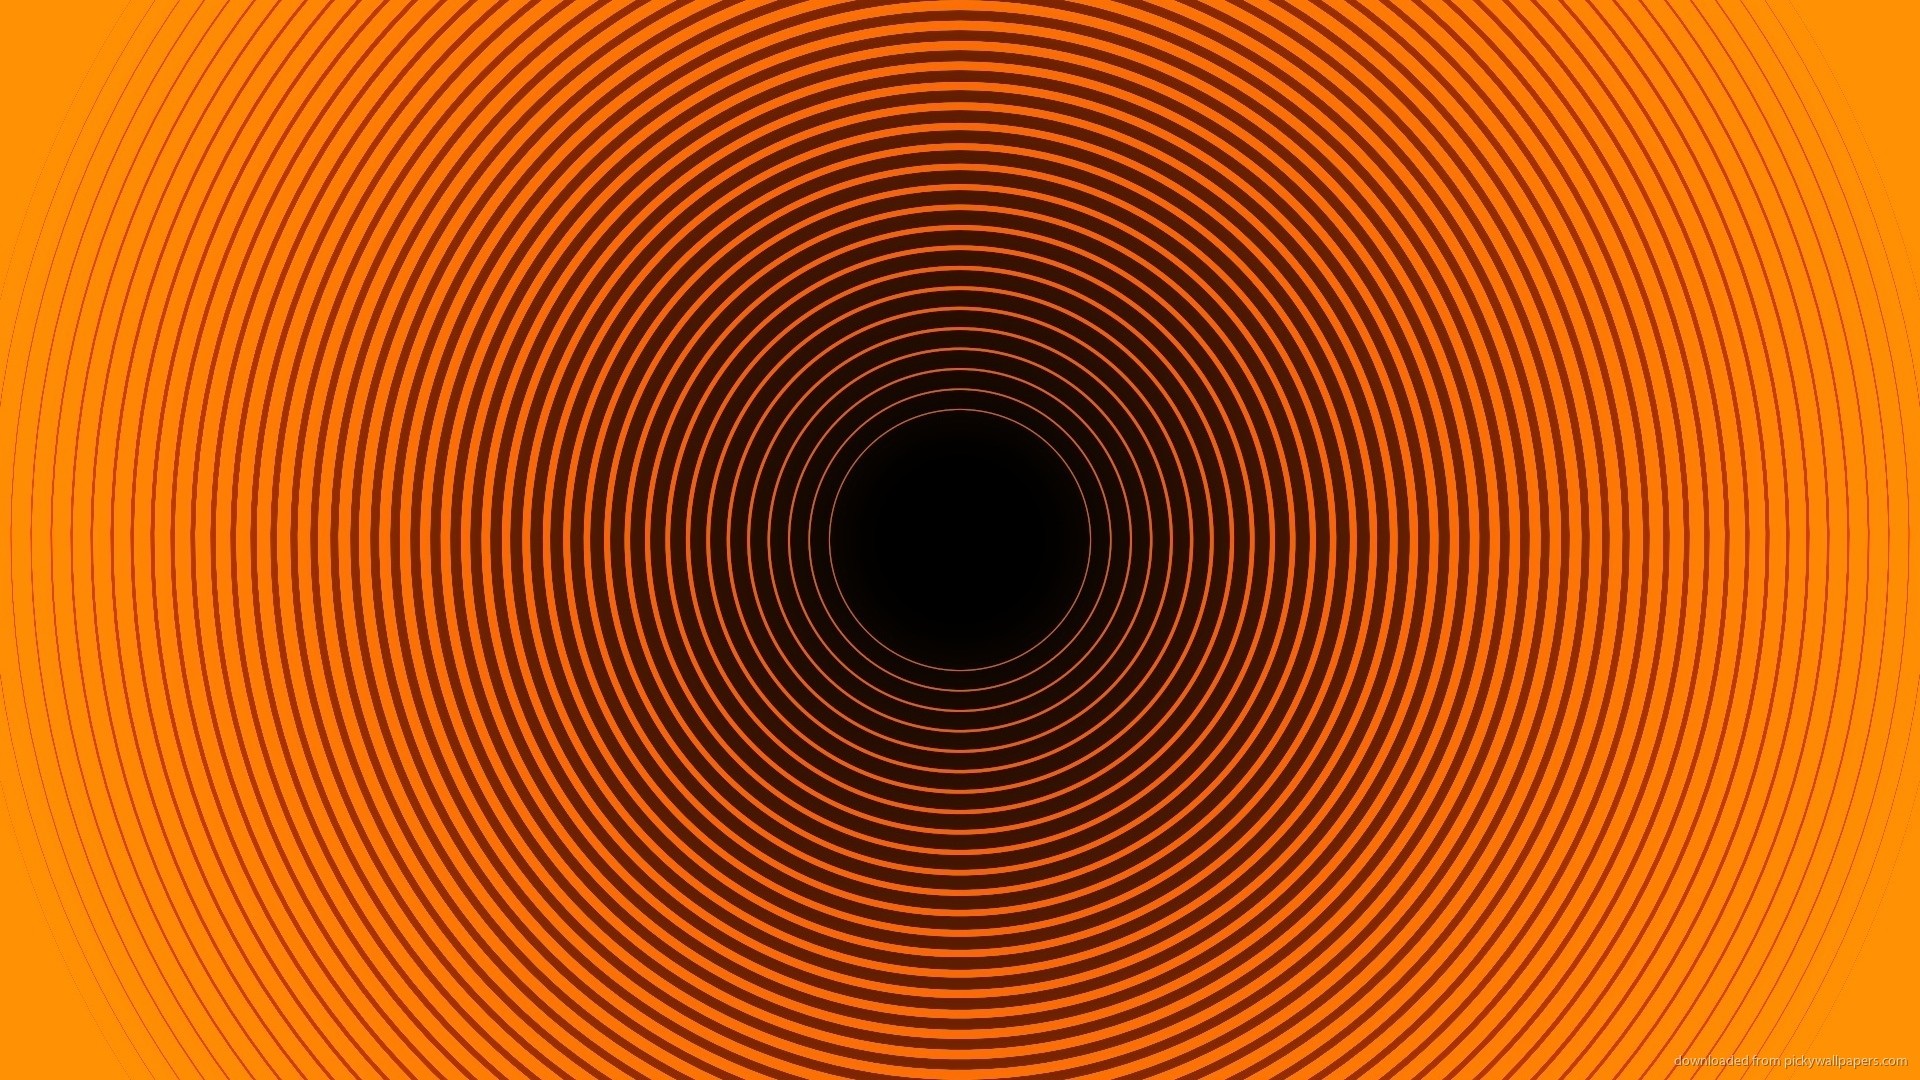 1920x1080 Orange and Black Optical Illusion Wallpaper picture